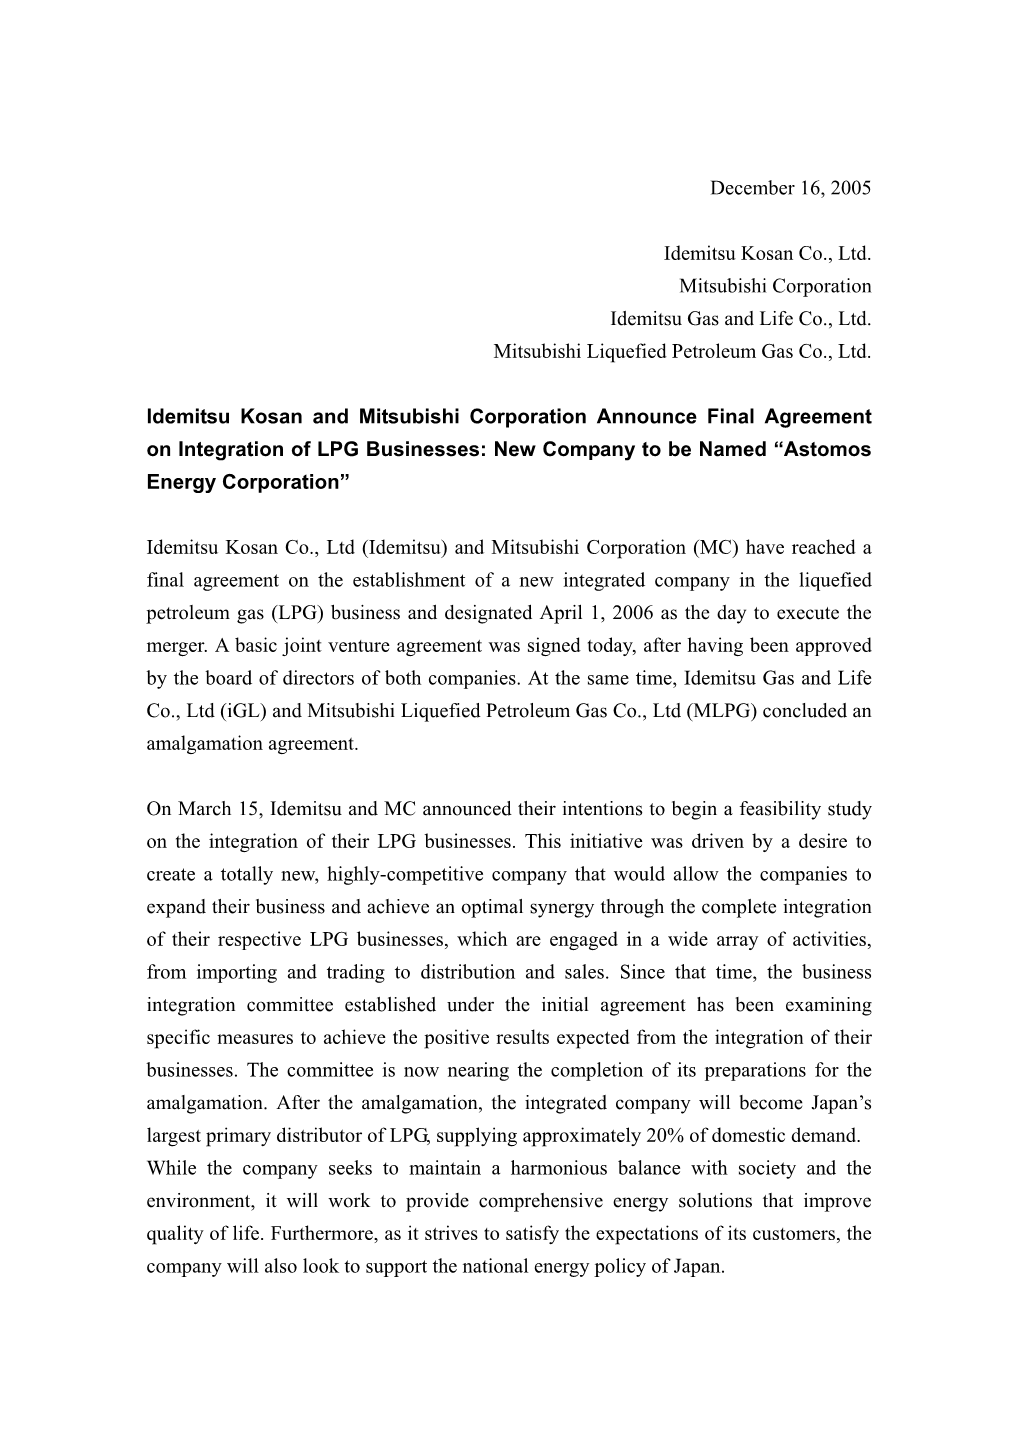 Idemitsu Kosan and Mitsubishi Corporation Announce Final Agreement on Integration of LPG Business:New Company To